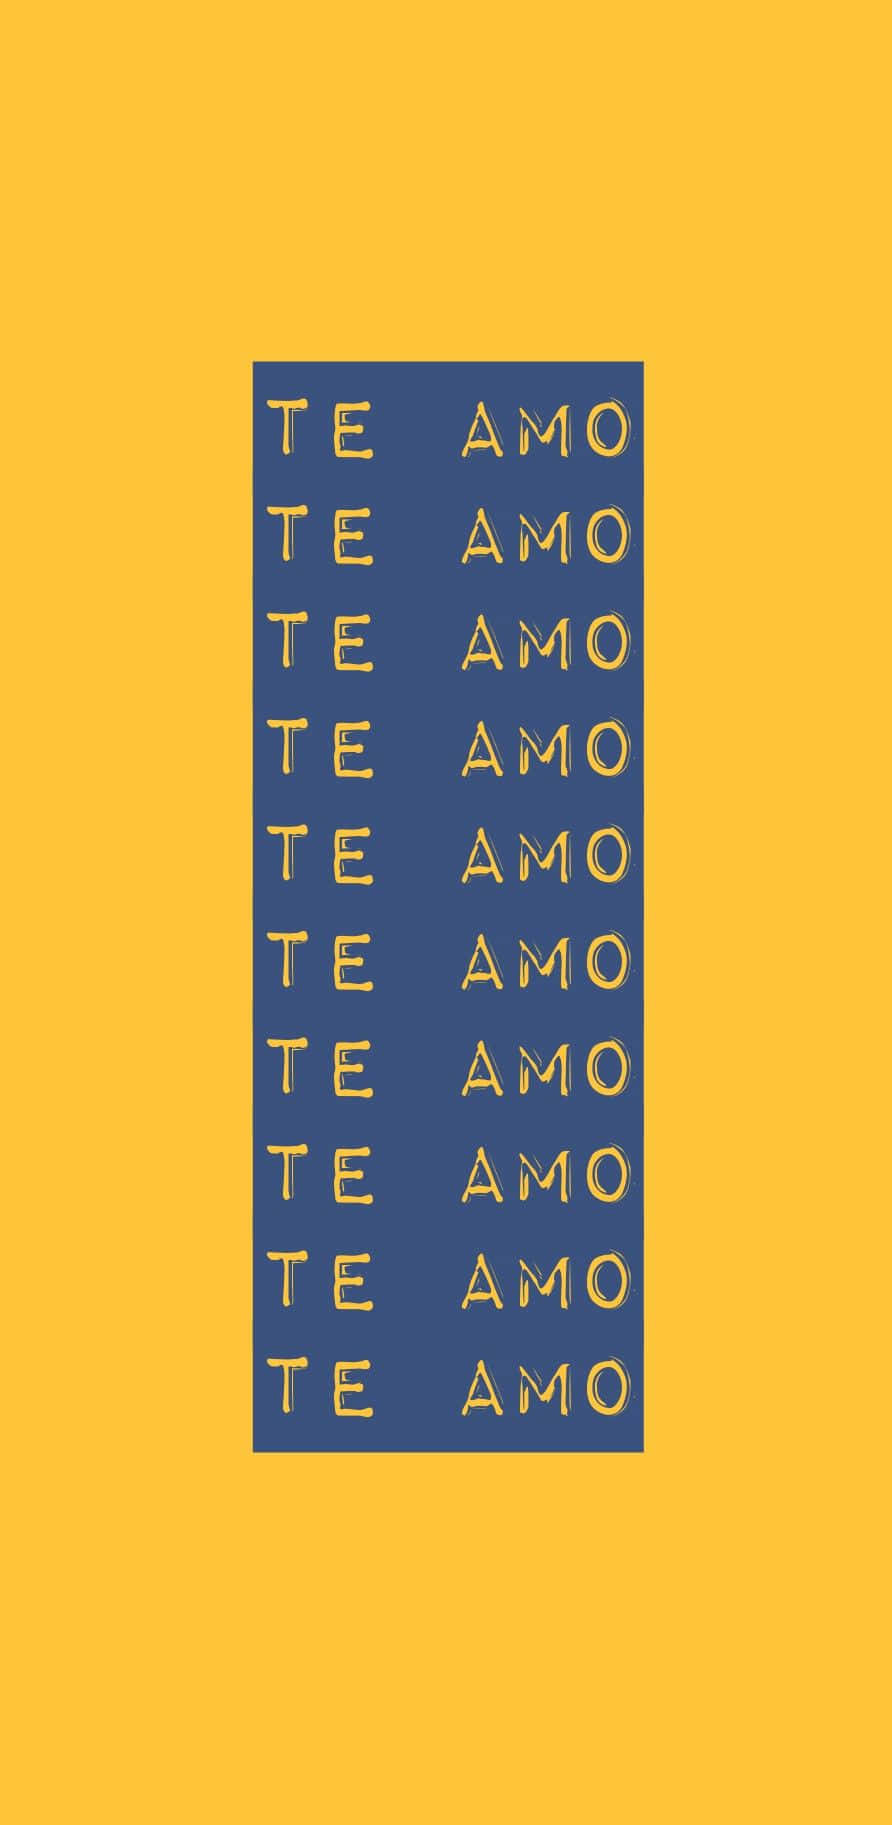 Te Amo Minimalist Design Spanish Love Statement Wallpaper